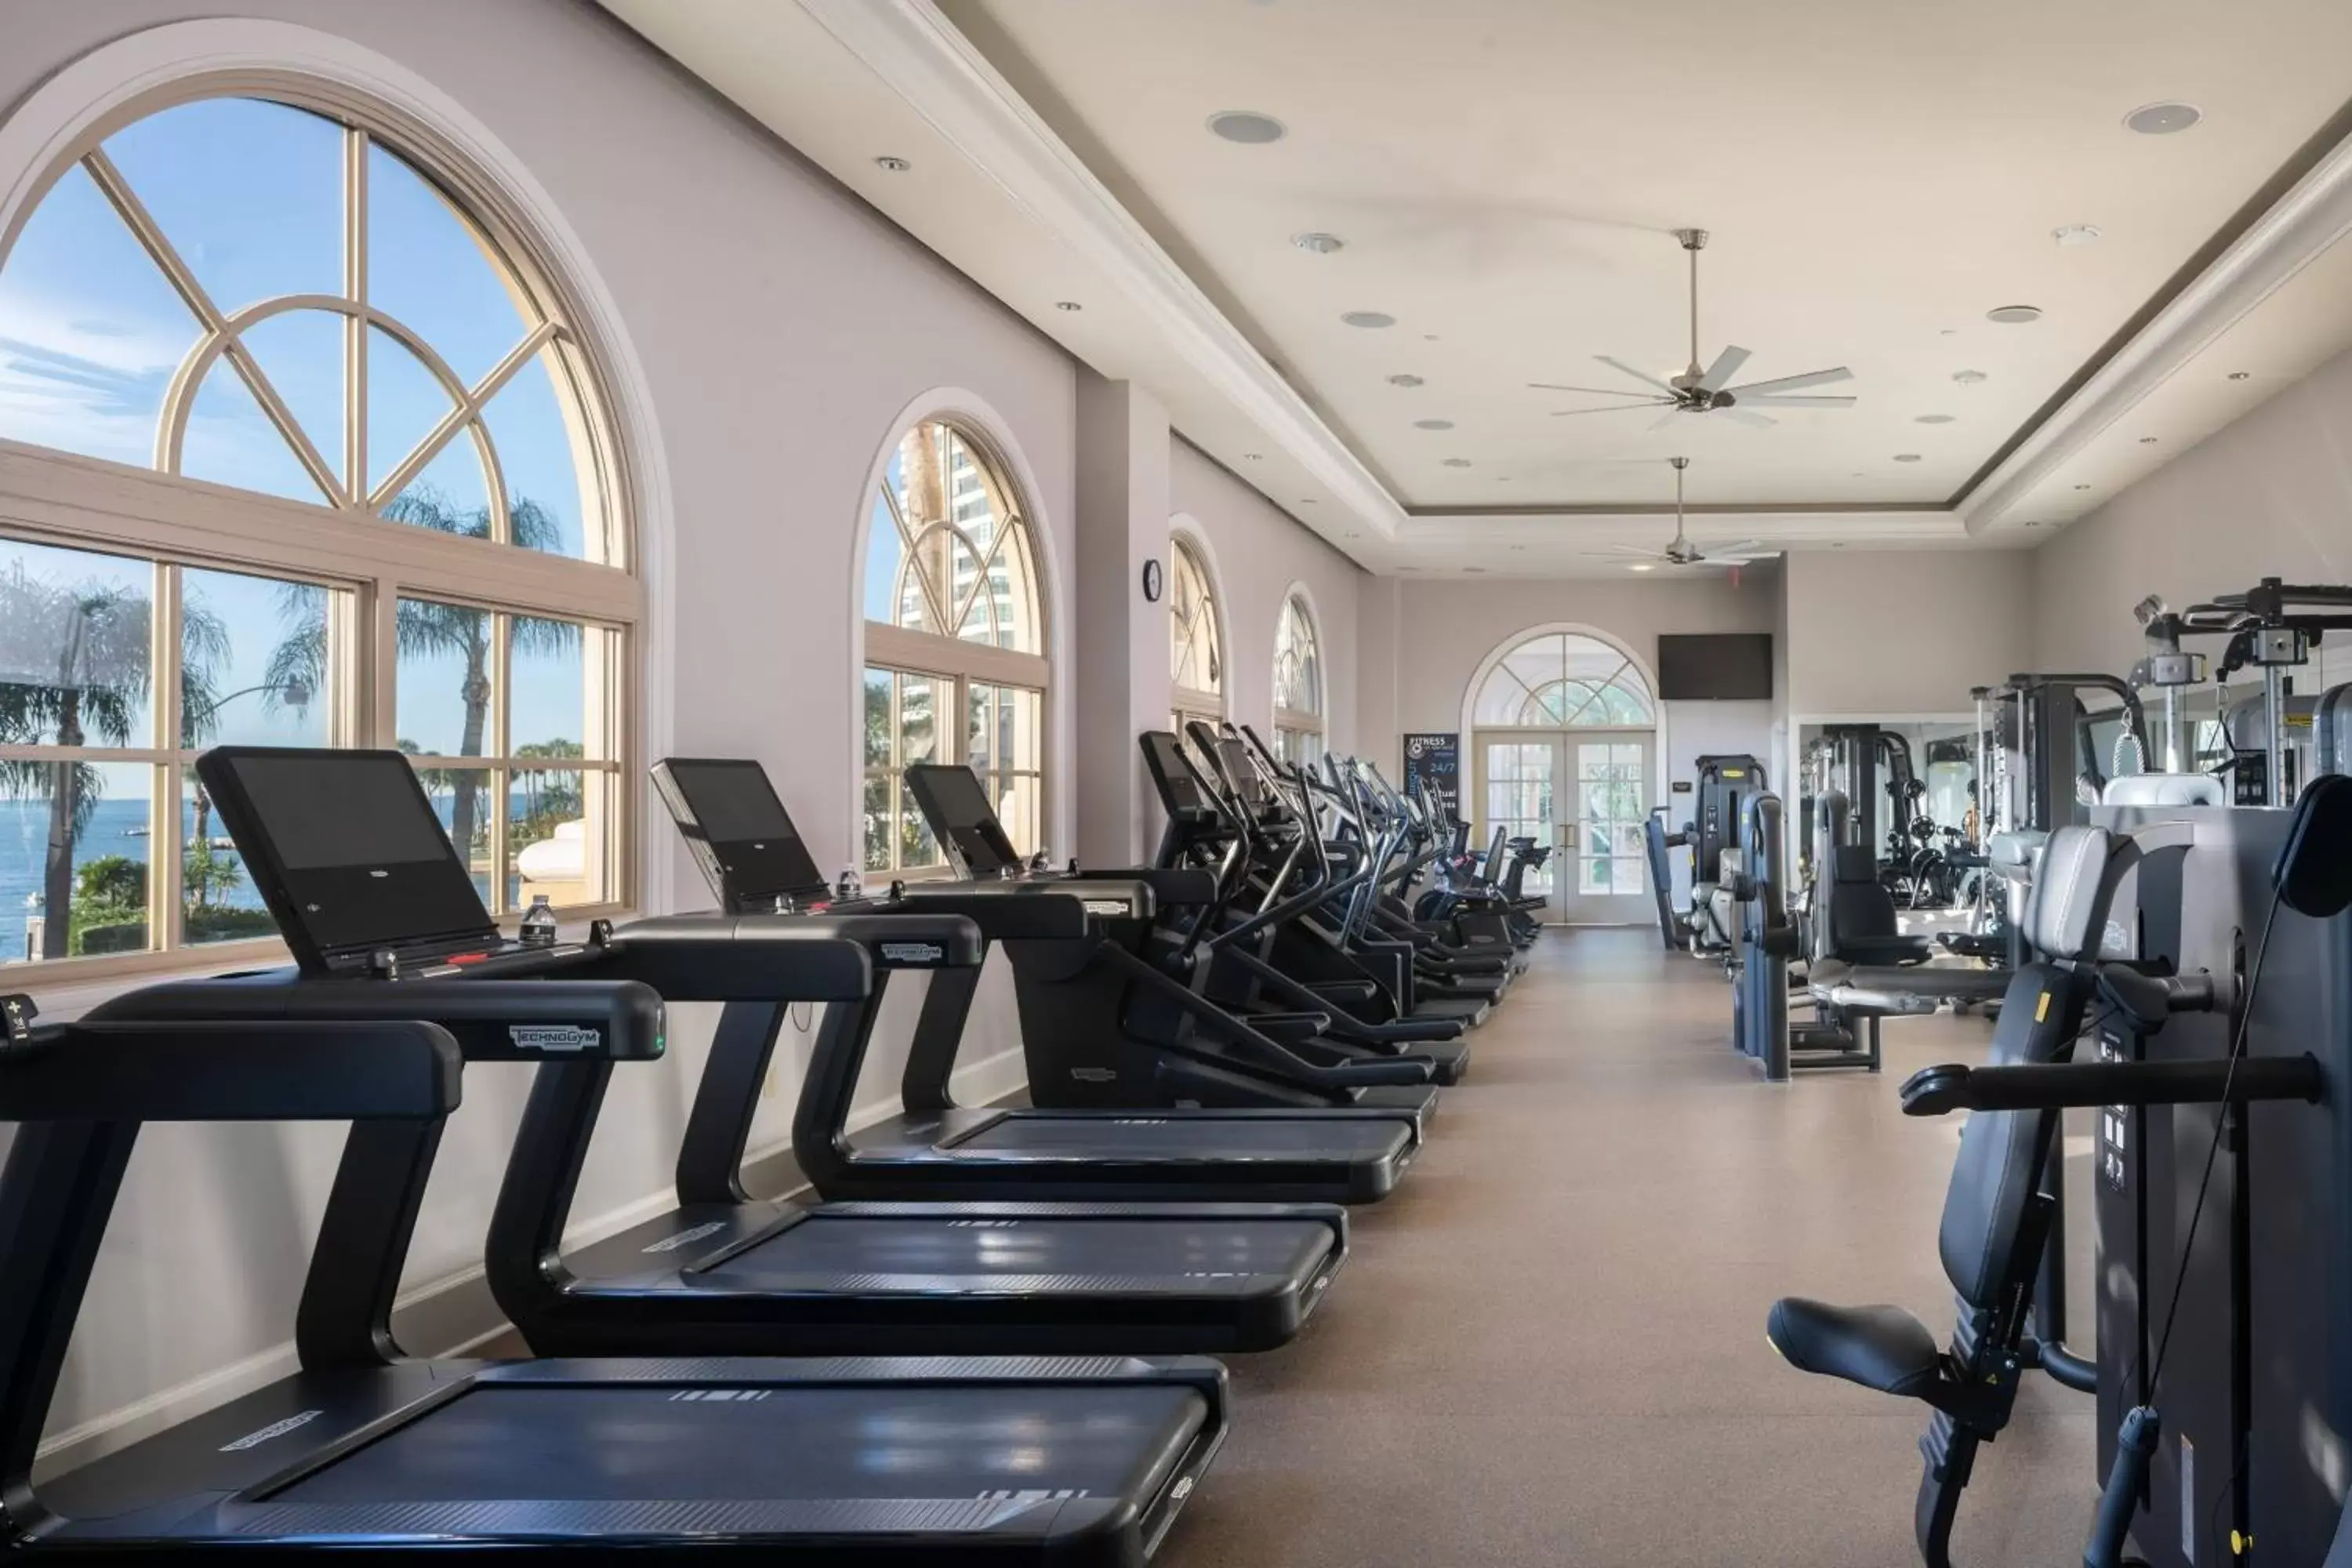 Fitness centre/facilities, Fitness Center/Facilities in The Ritz-Carlton, Sarasota